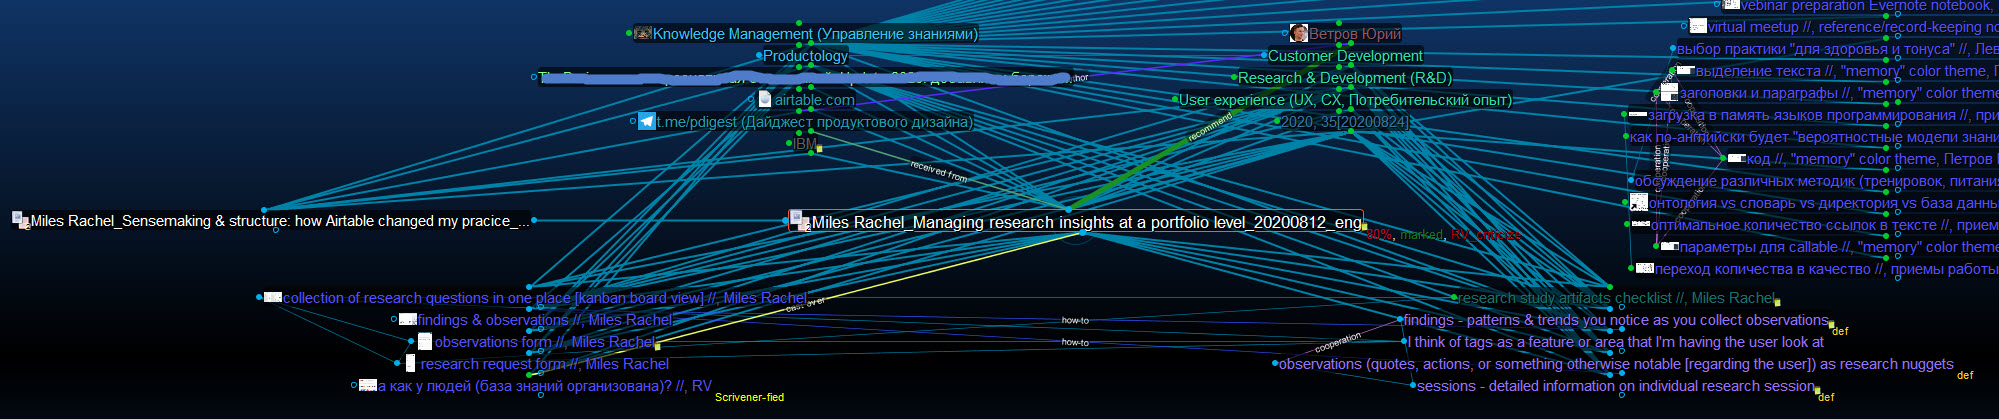 RV_Managing research insights_TB8 screen_20200824.jpg